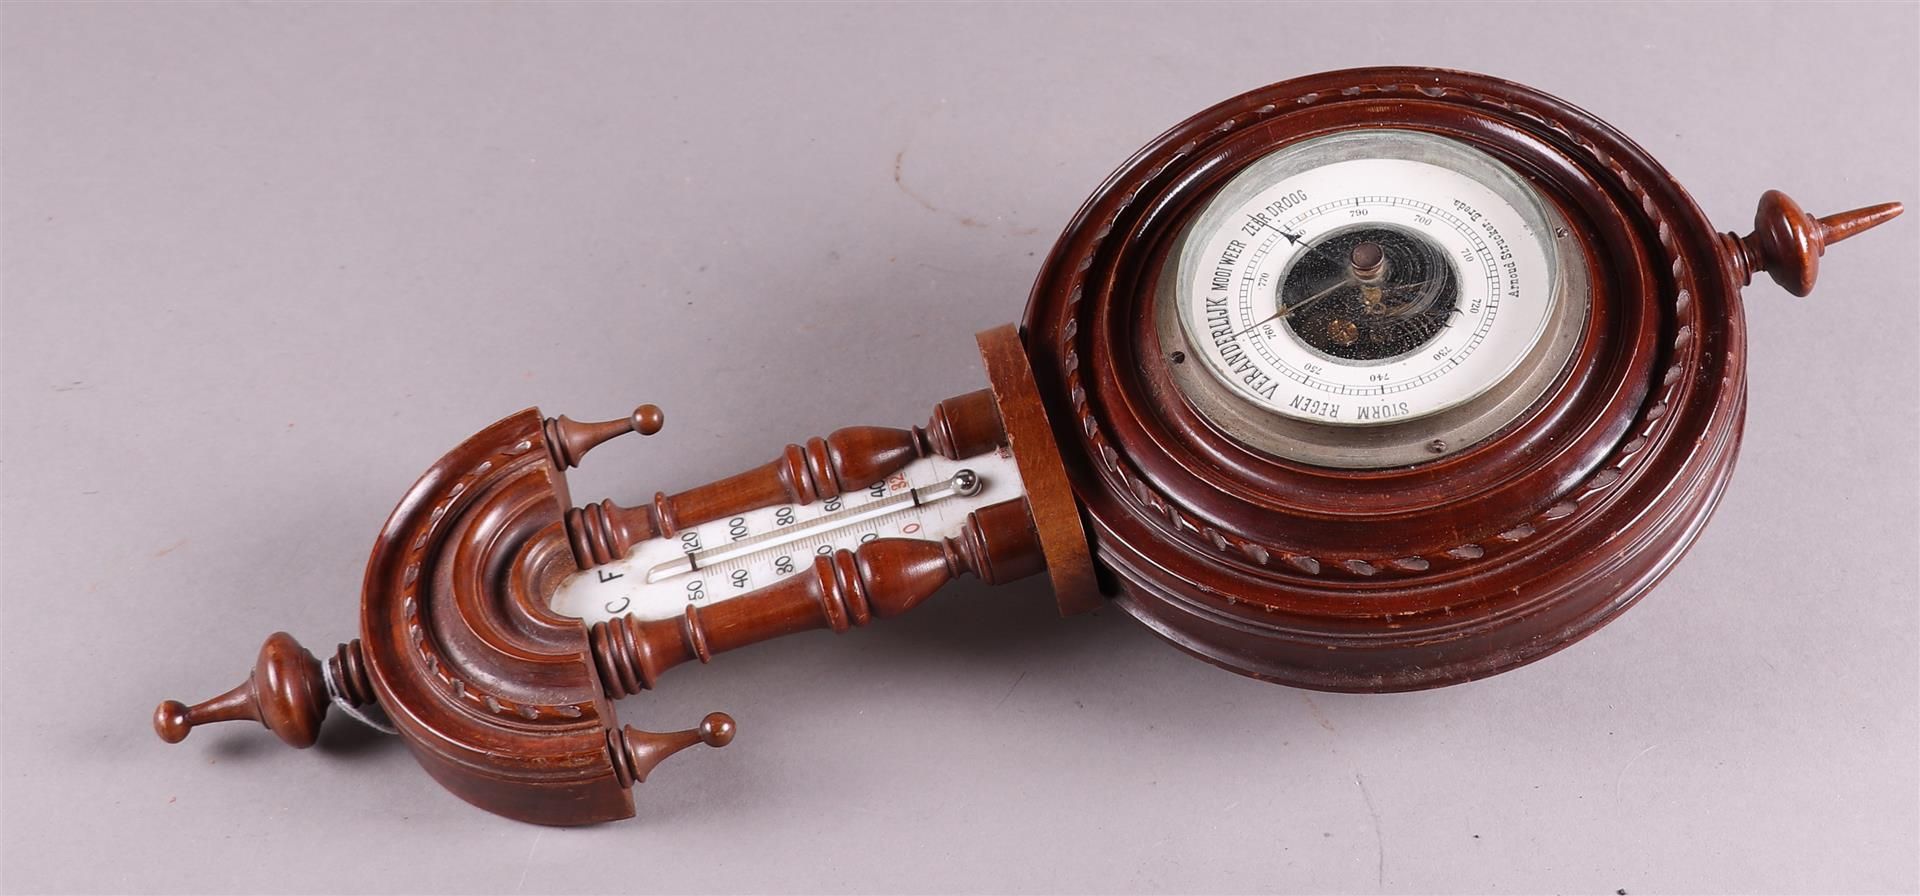 A 1930's barometer with temperature indication, address: Arnoud Strucker, Breda, ca. 1920/30.